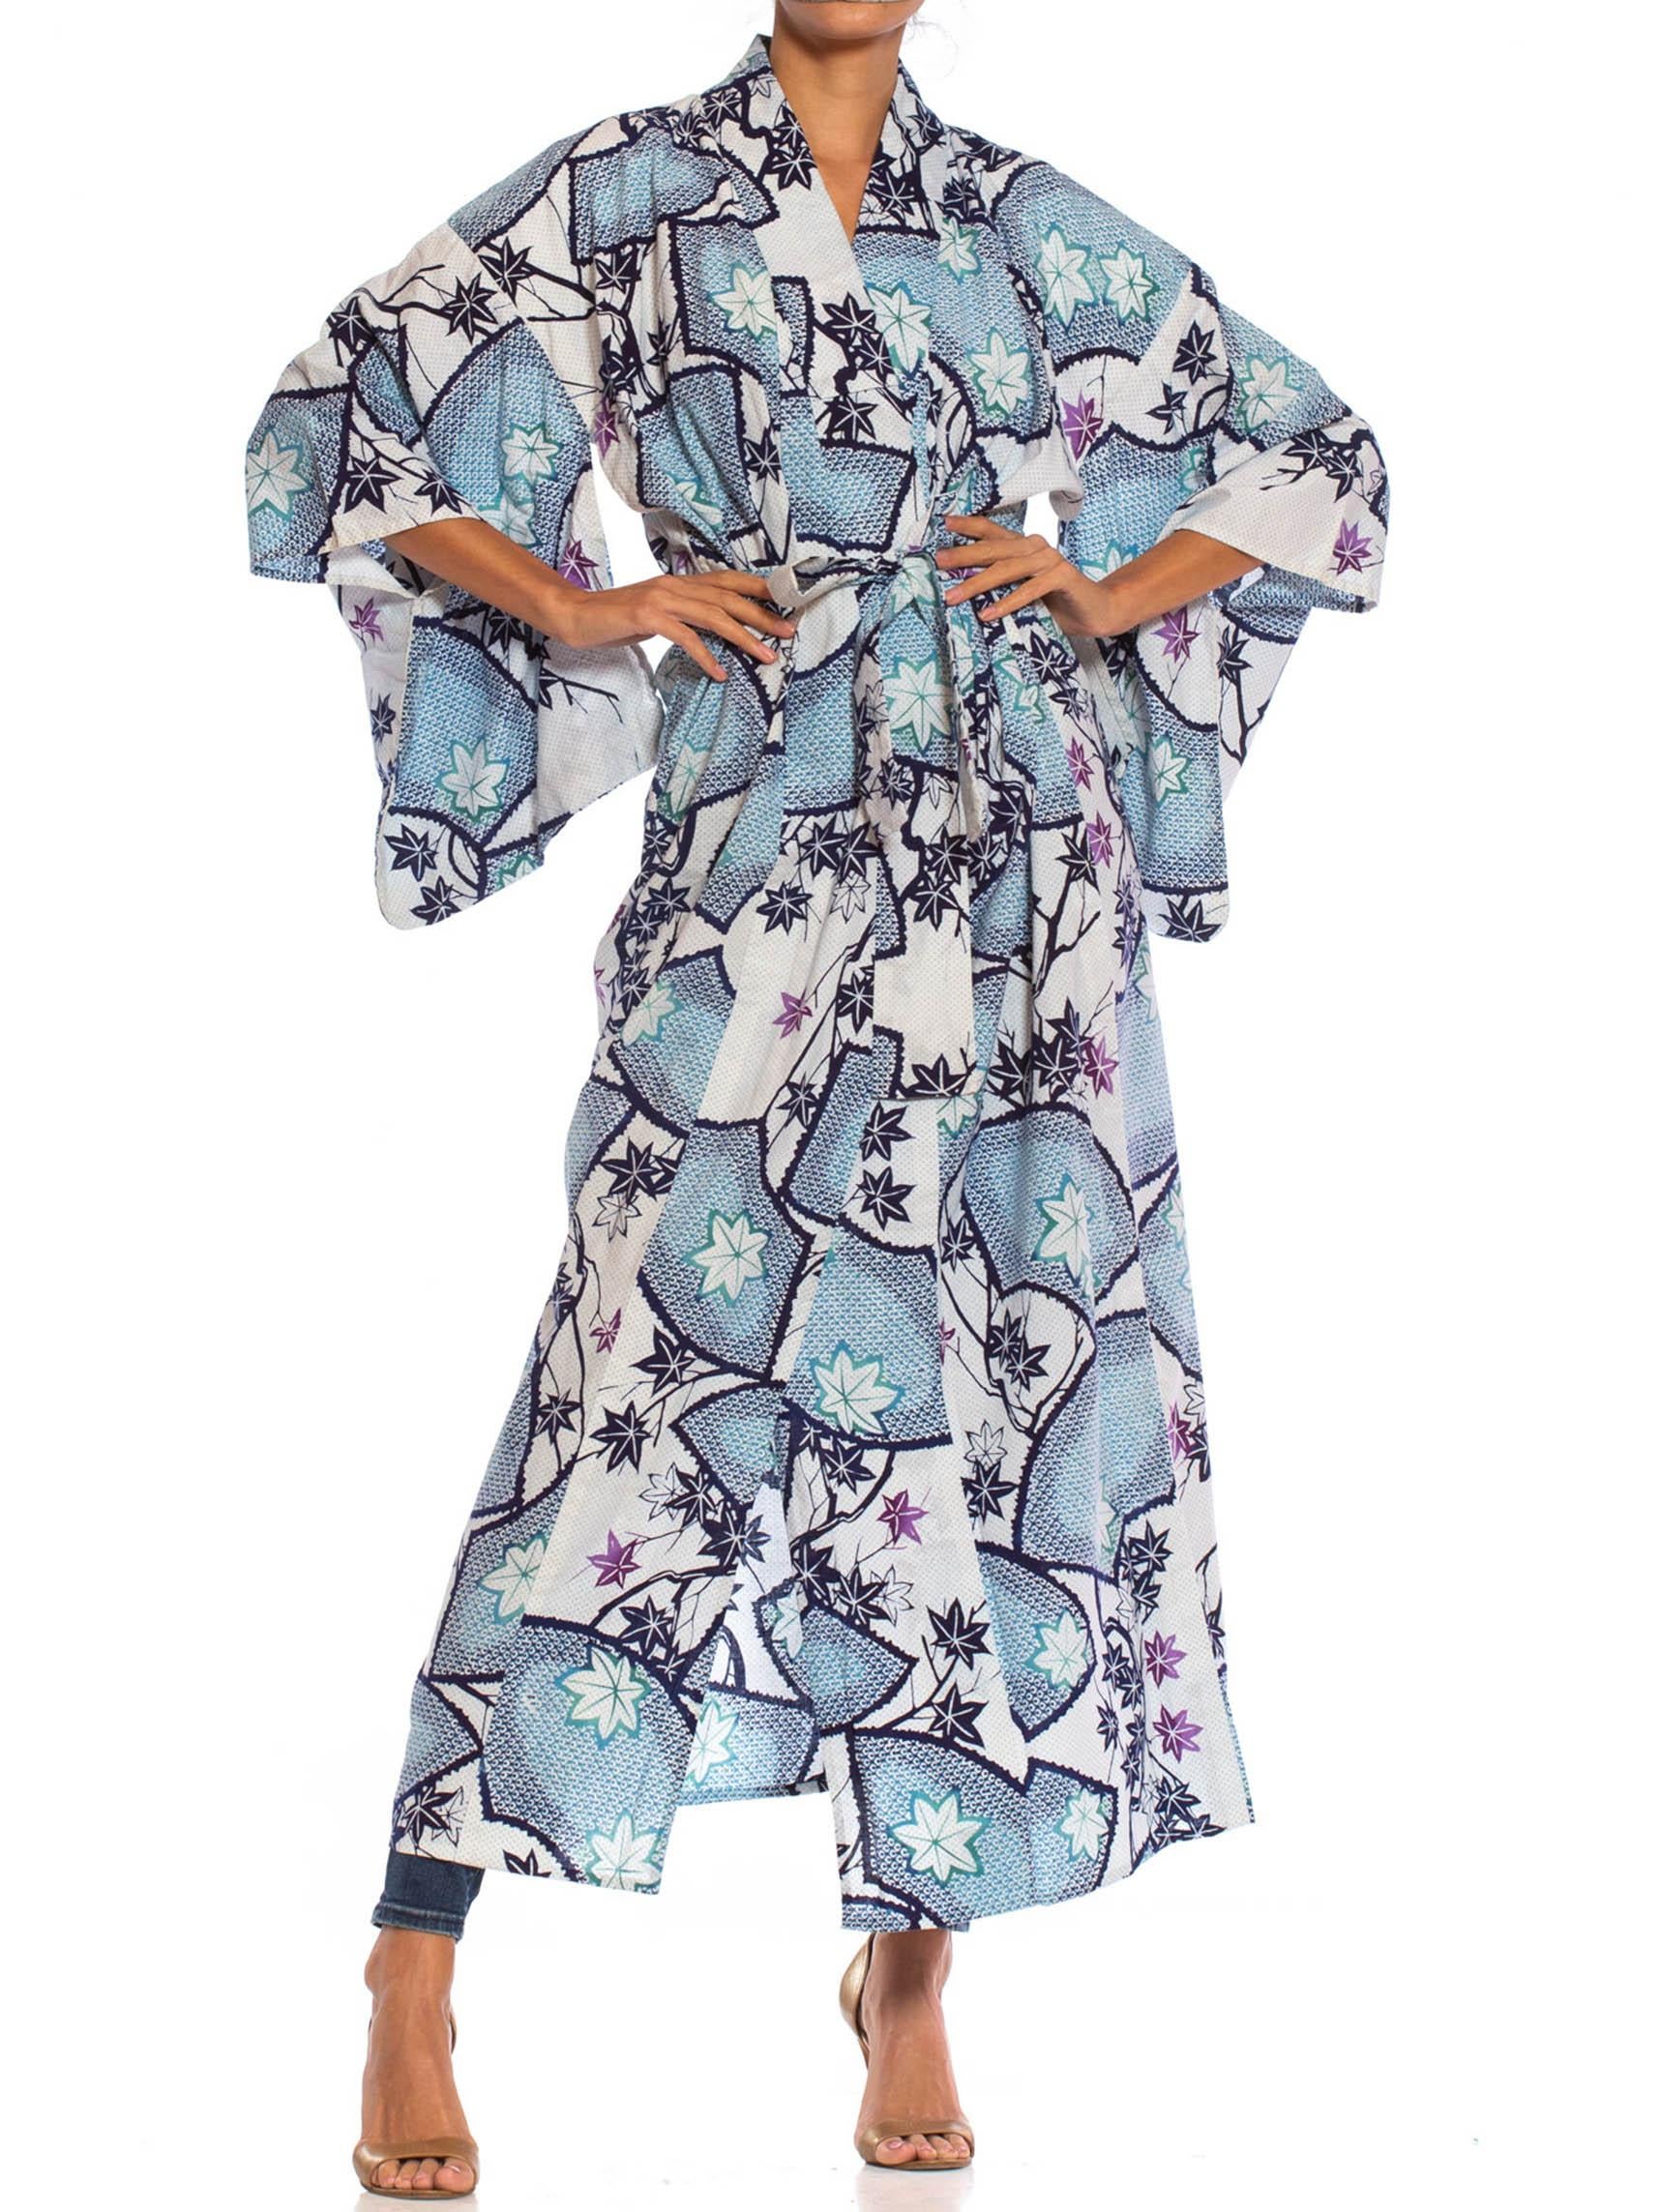 1980S Blue & White Cotton Japanese Maple Leaf Shibori Print Kimono Robe Sash In Excellent Condition For Sale In New York, NY